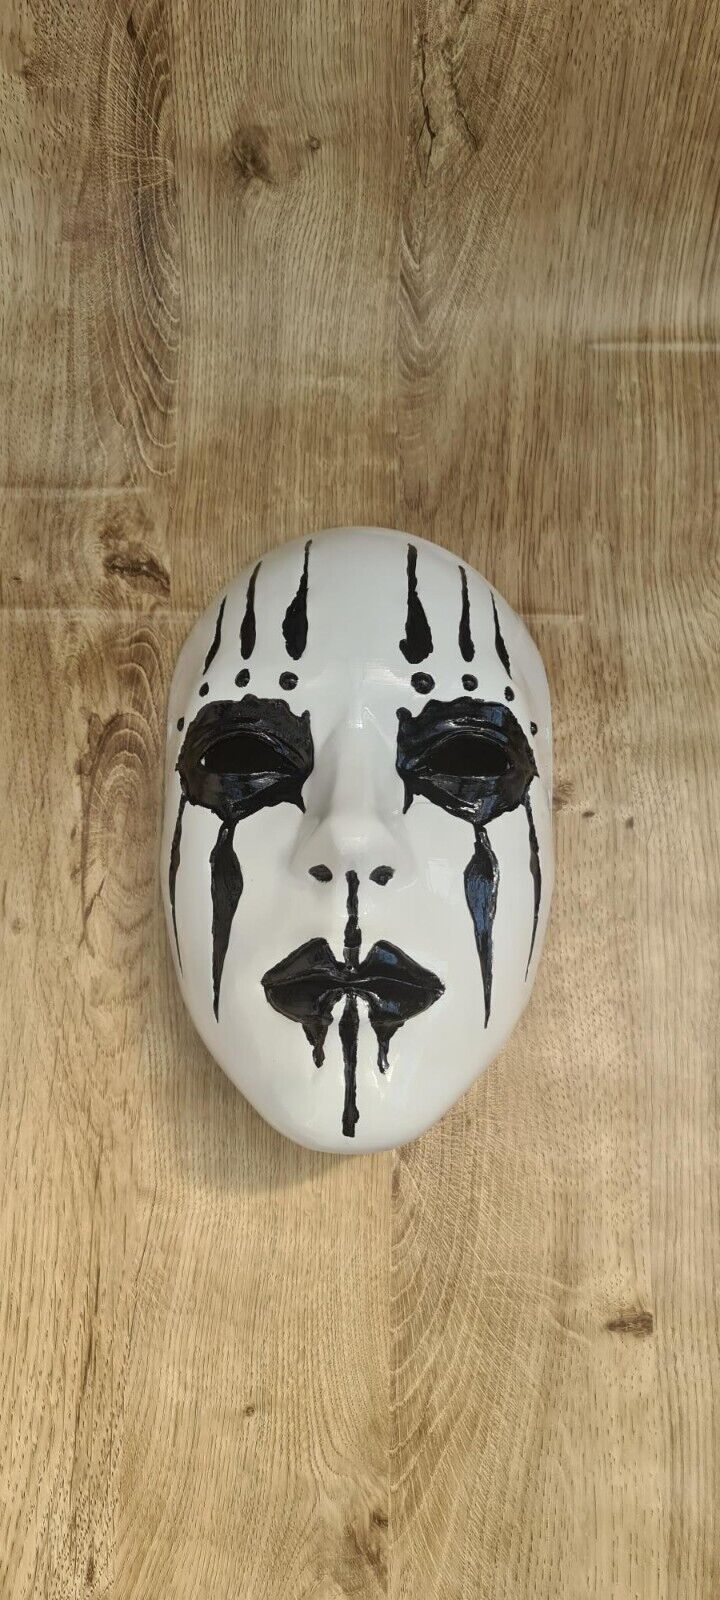 Joey Jordison Slipknot Mask